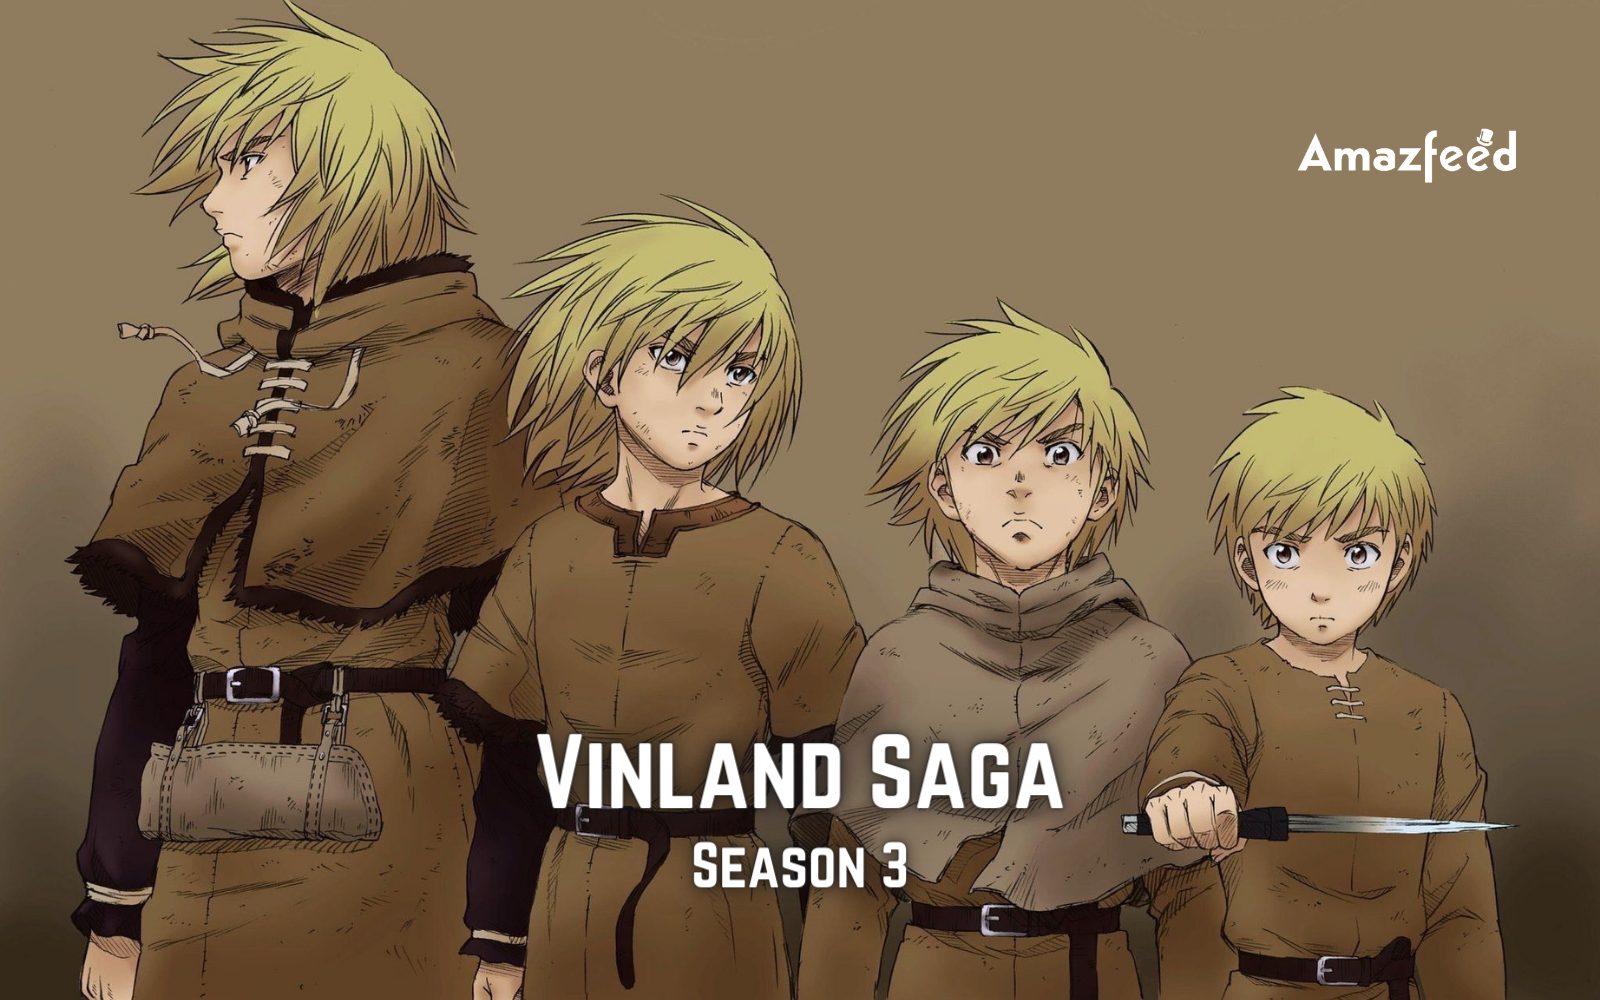 Vinland Saga at #3 in anime of the week! : r/VinlandSaga